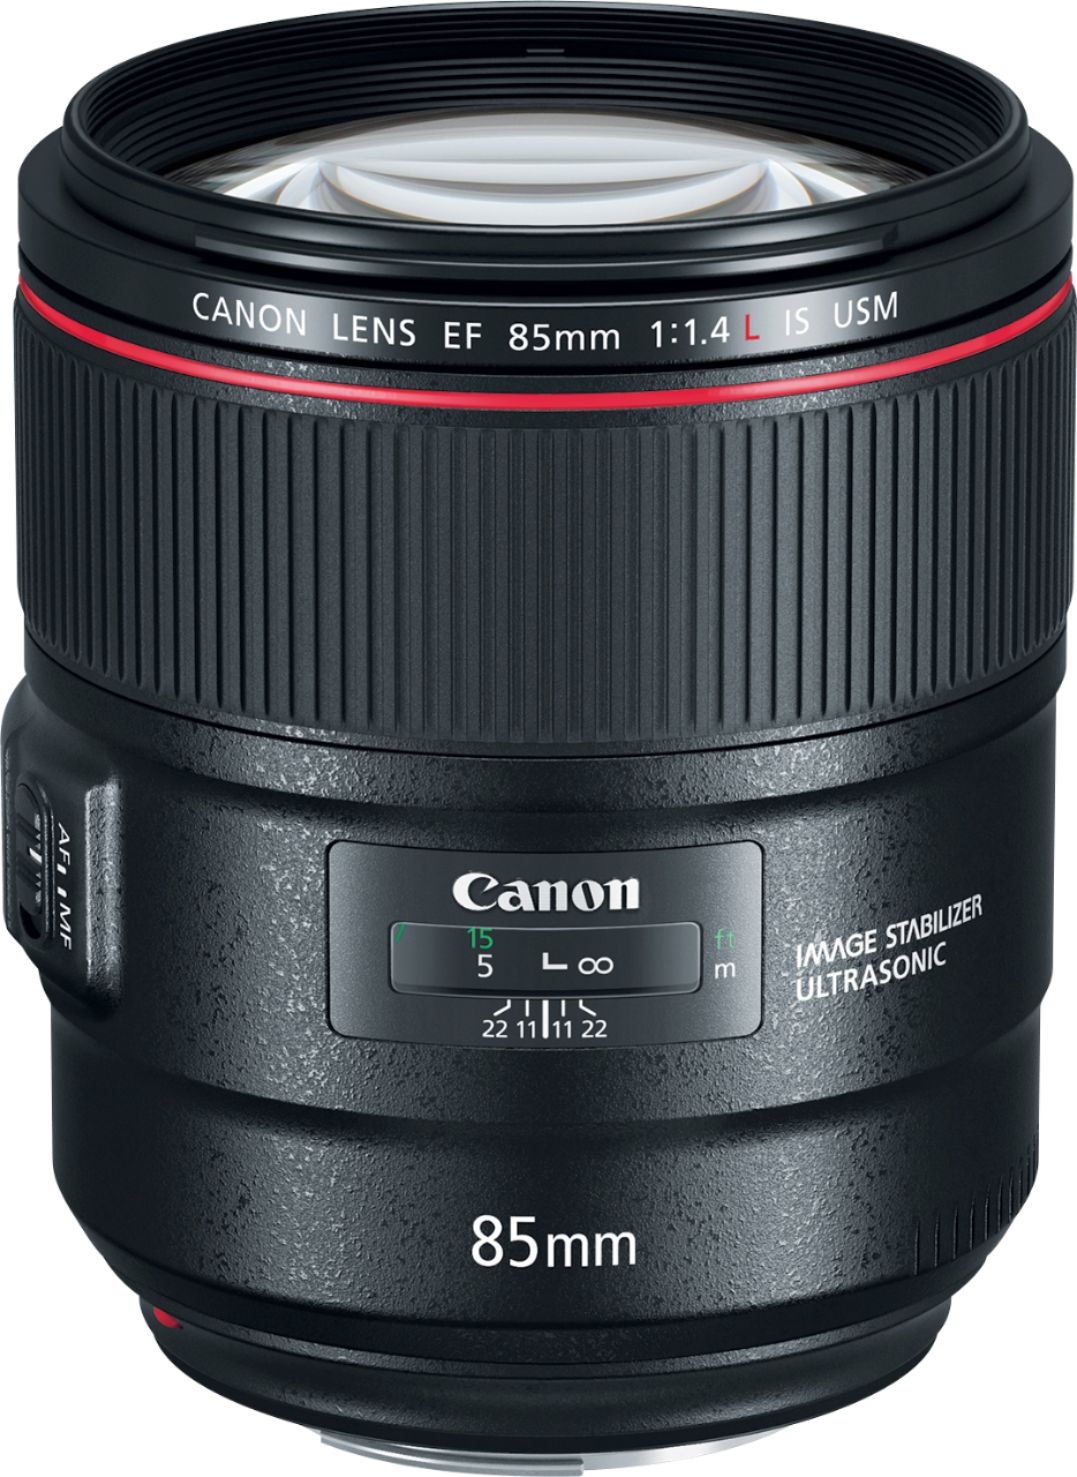 Canon - EF 85mm f/1.4L IS USM Telephoto Lens for DSLRs - Black